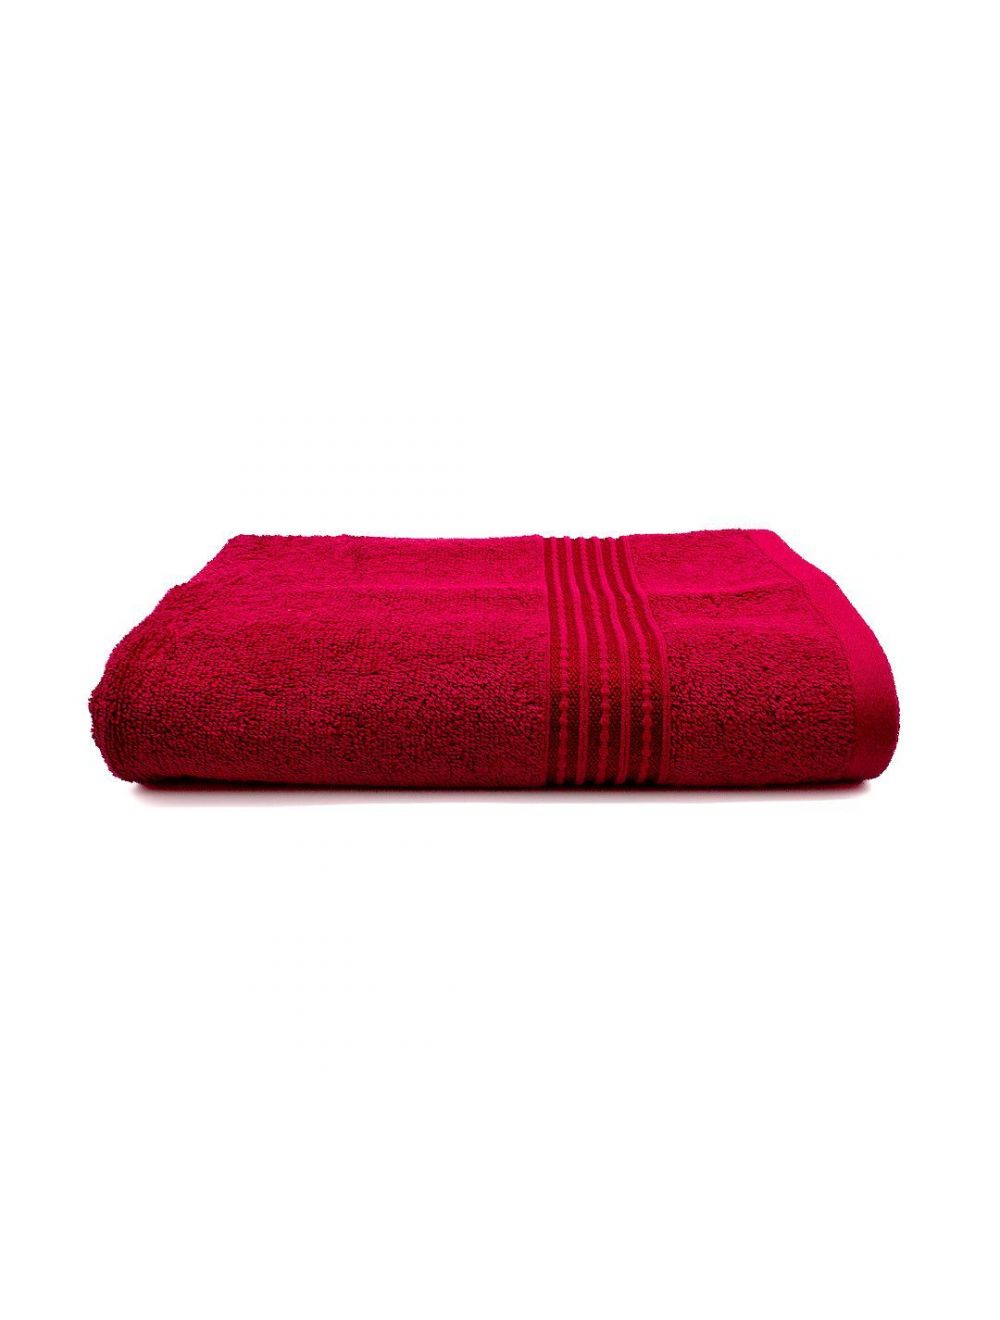 Rahalife 100% Cotton Bath Towel, Classic Collection, Maroon  -14RLBT002